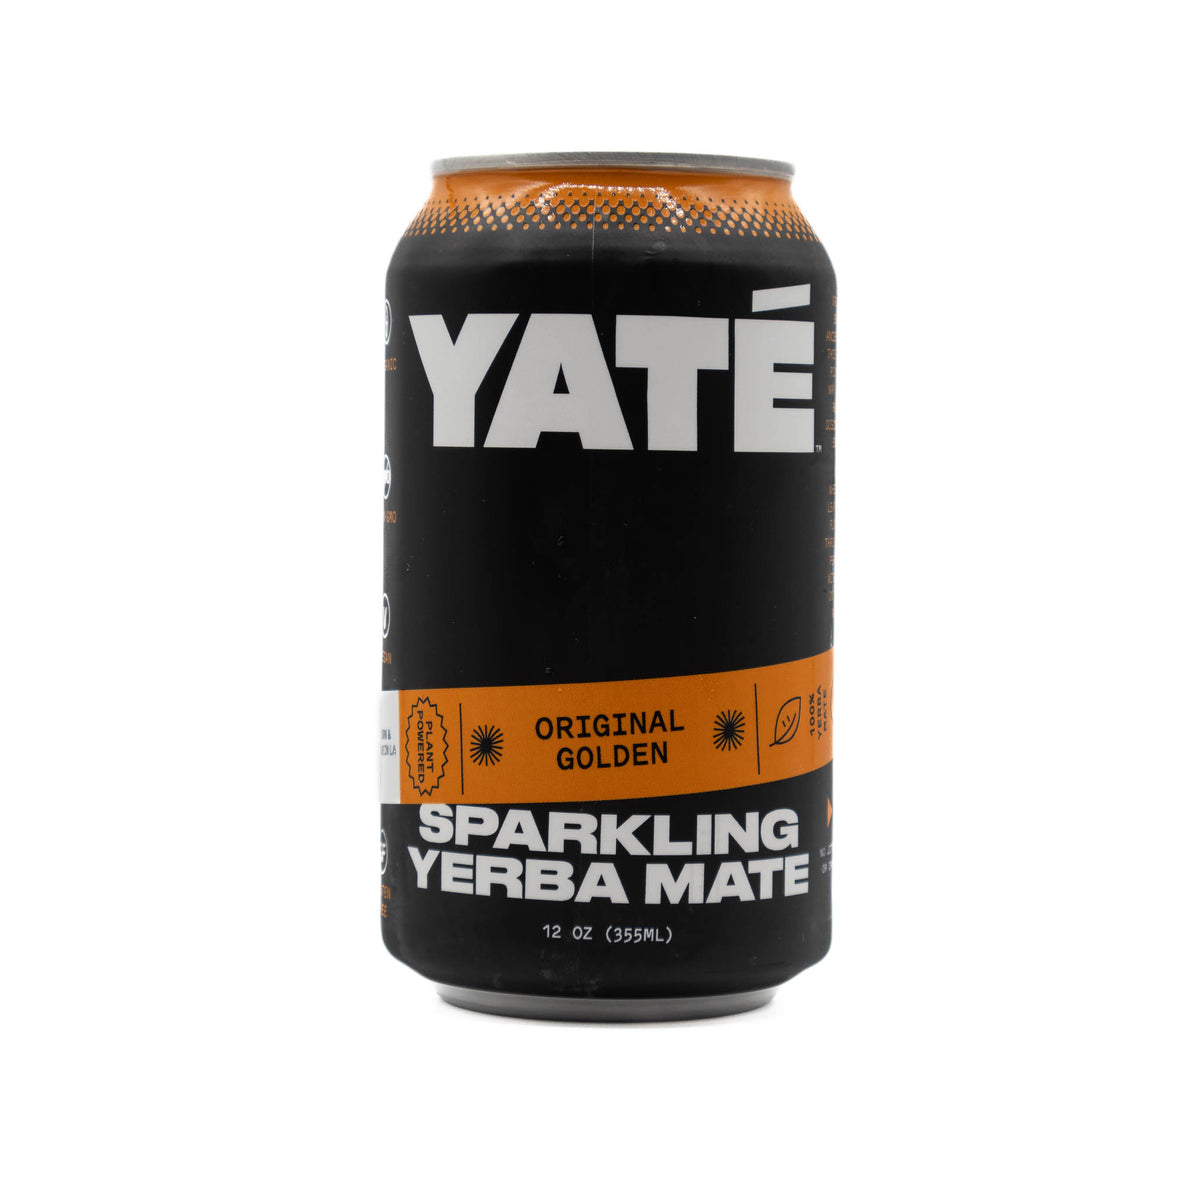 Yate Yerba Mate Sparkling Original